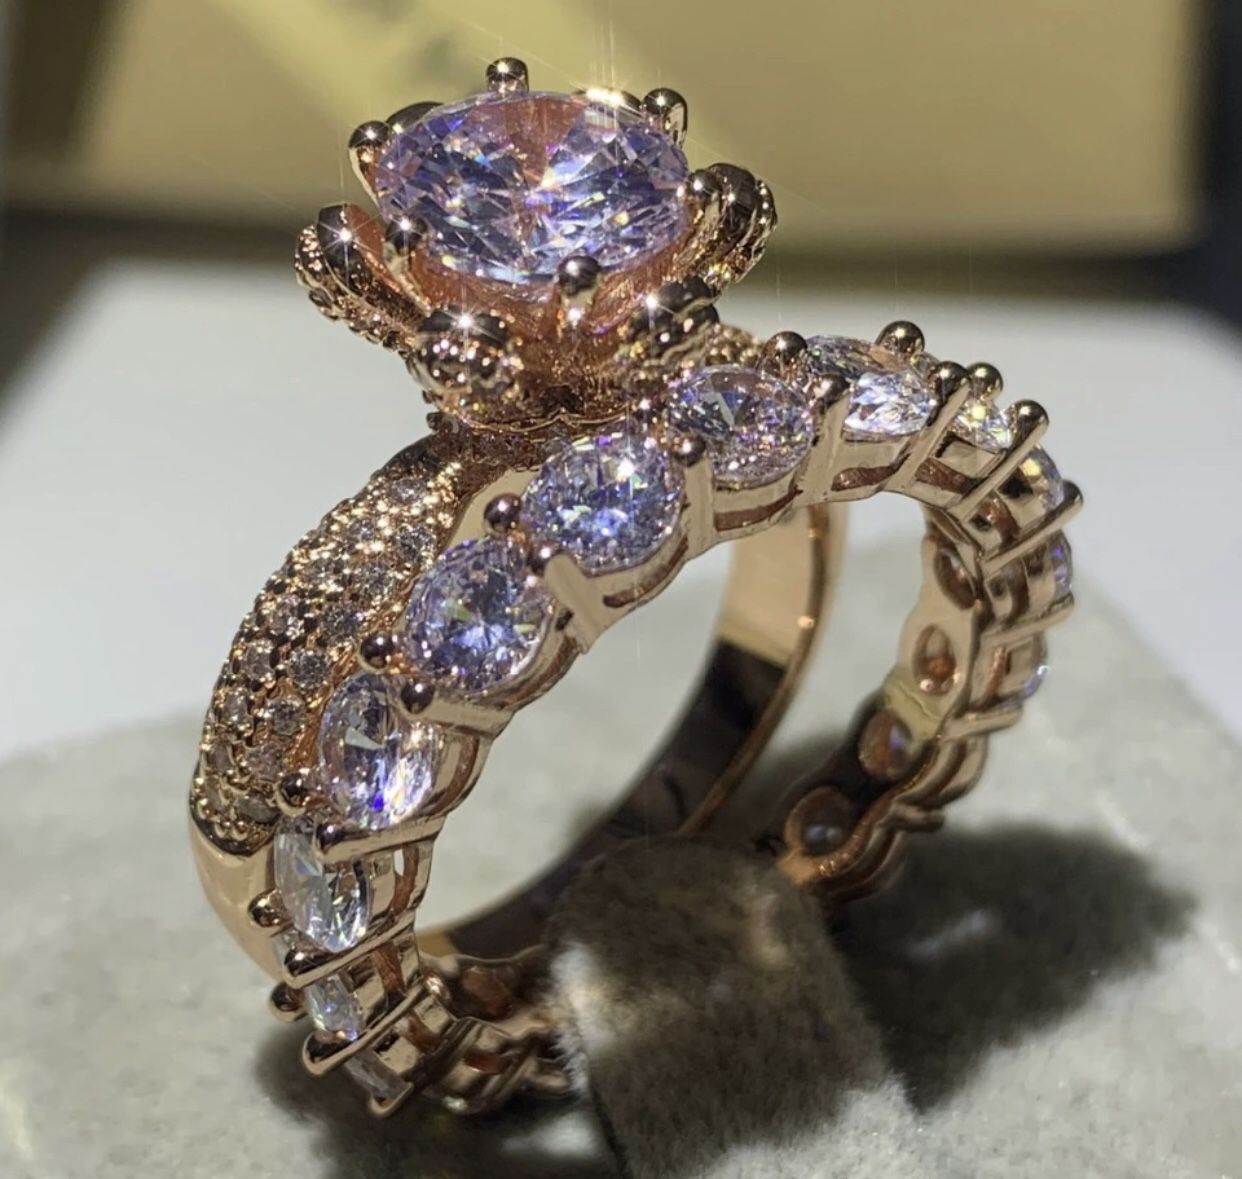 New engagement ring wedding ring set